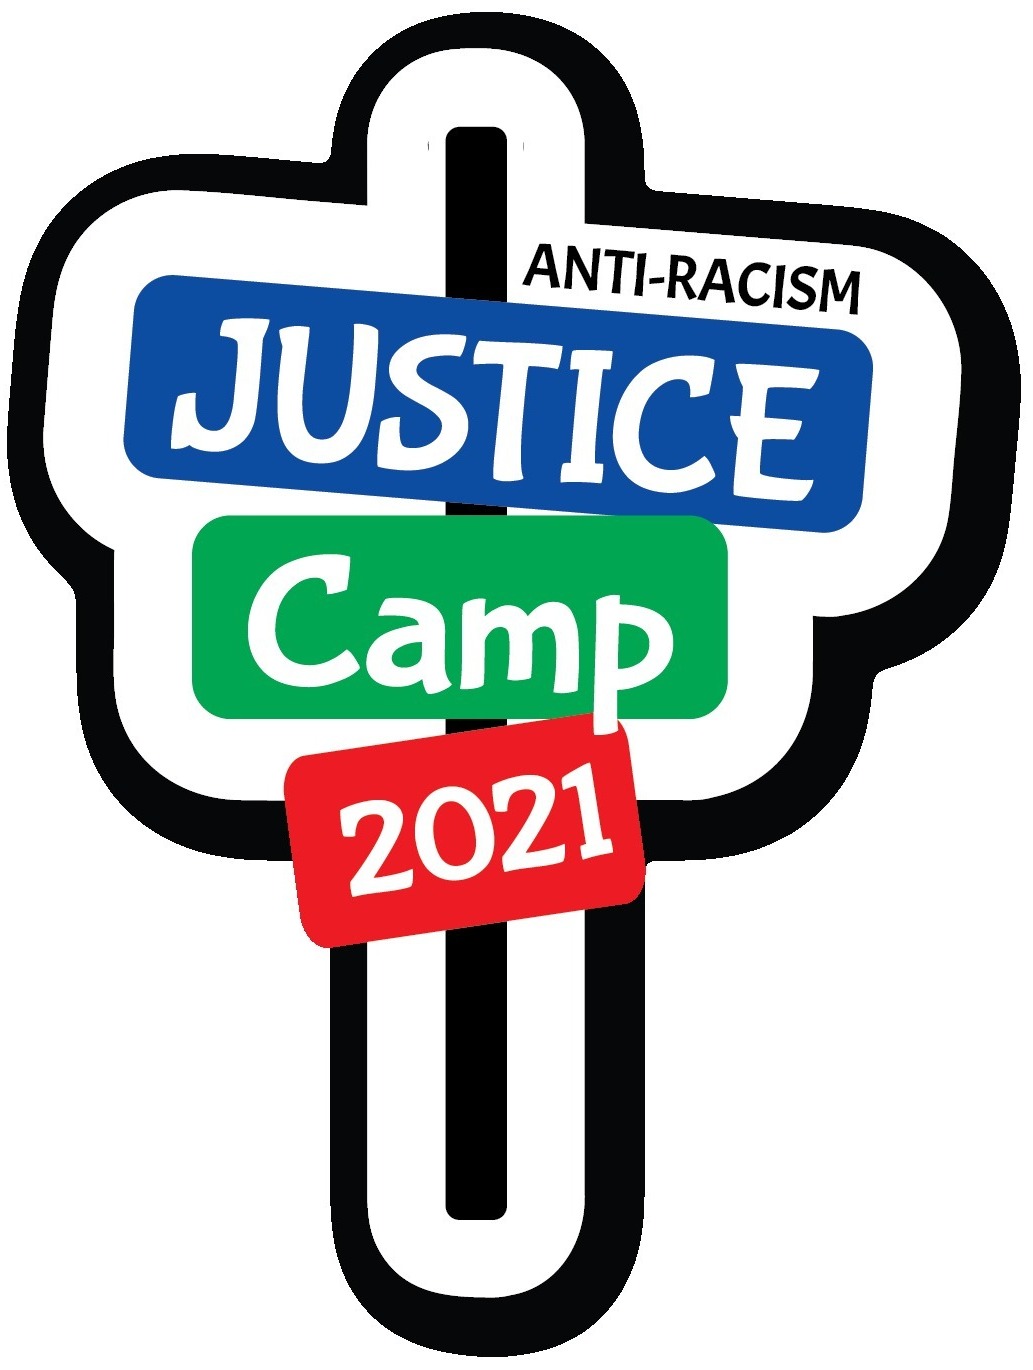 Justice Camp Logo 2021